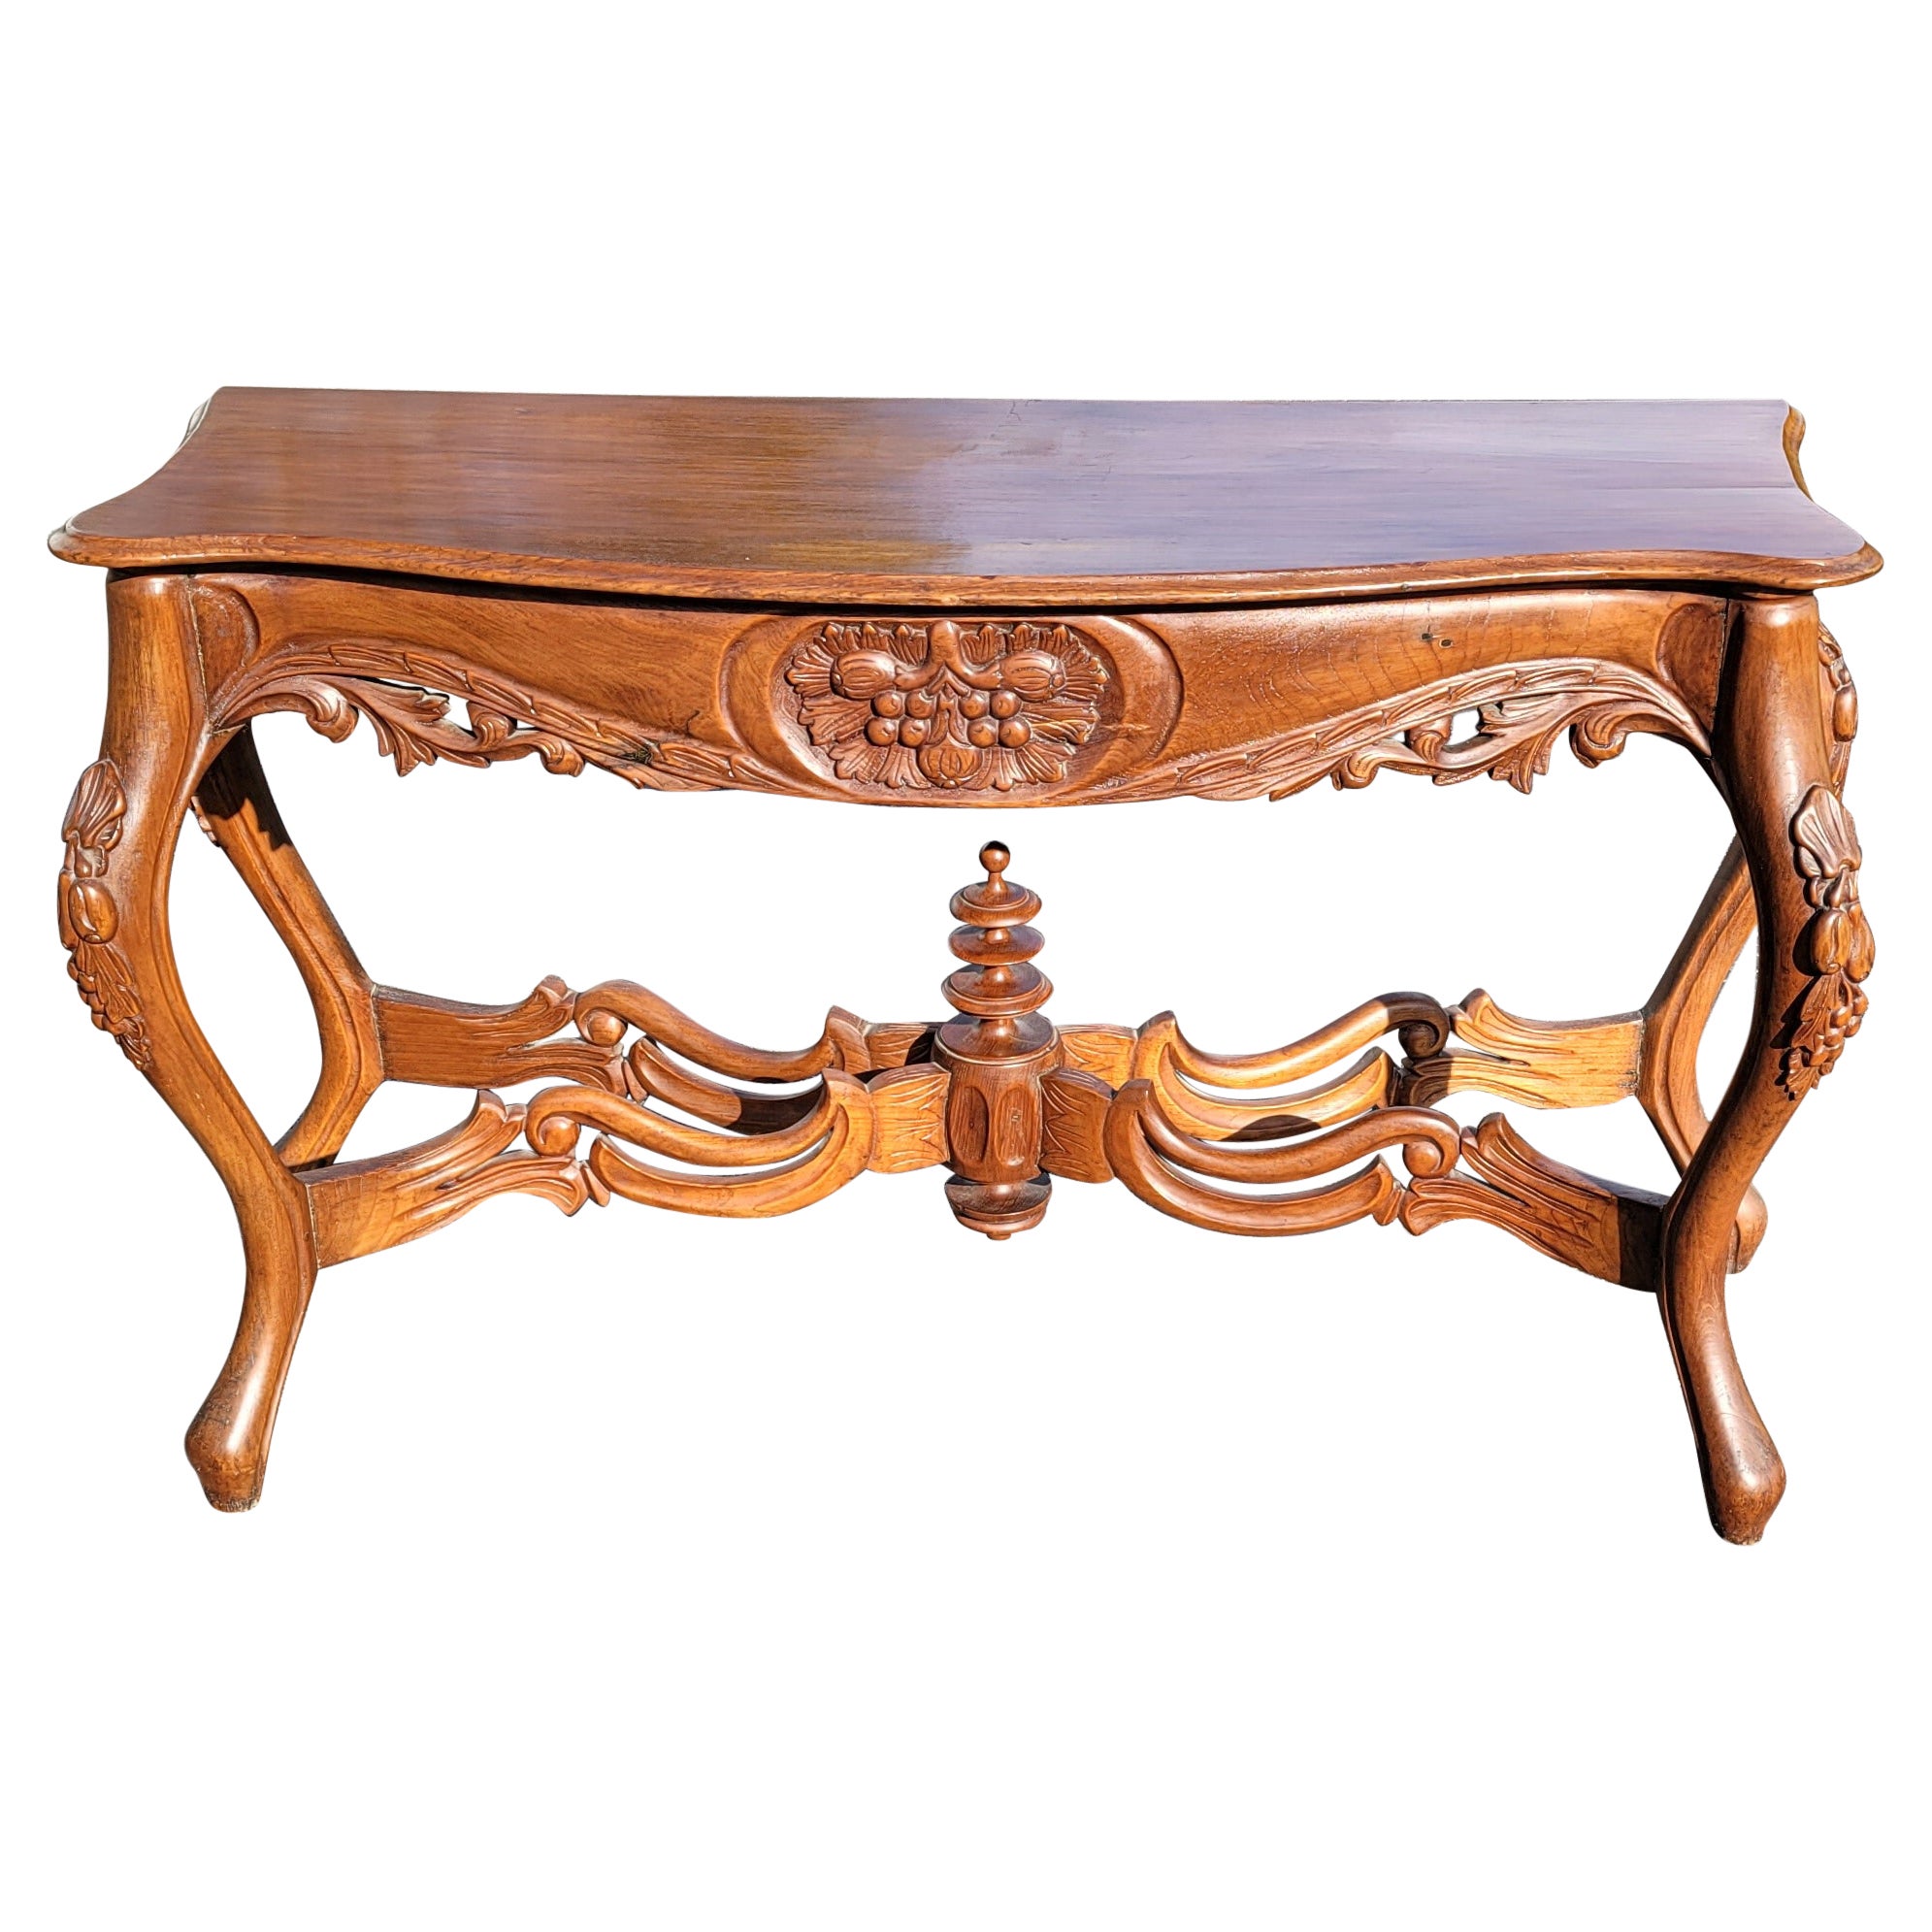 Table console serpentine en acajou sculpté de style rococo